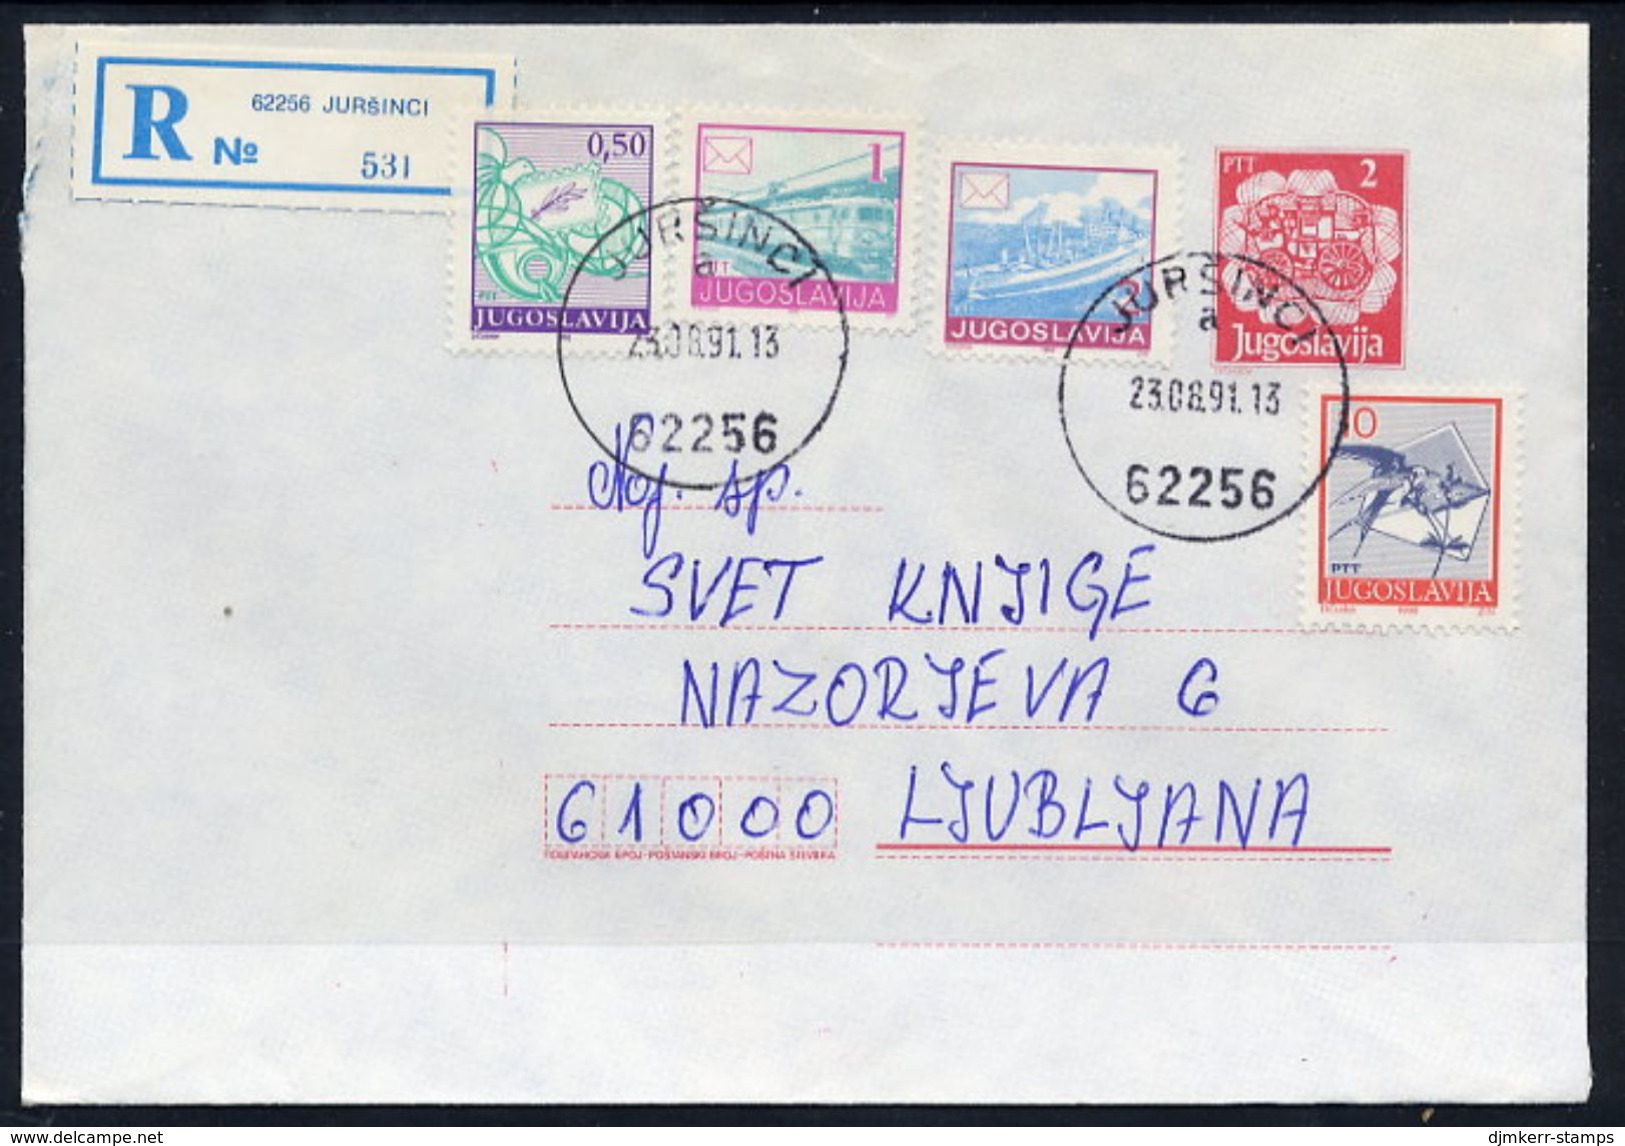 YUGOSLAVIA 1990 Mailcoach 2 D. Stationery Envelope Used With Additional Franking.  Michel U96 - Ganzsachen